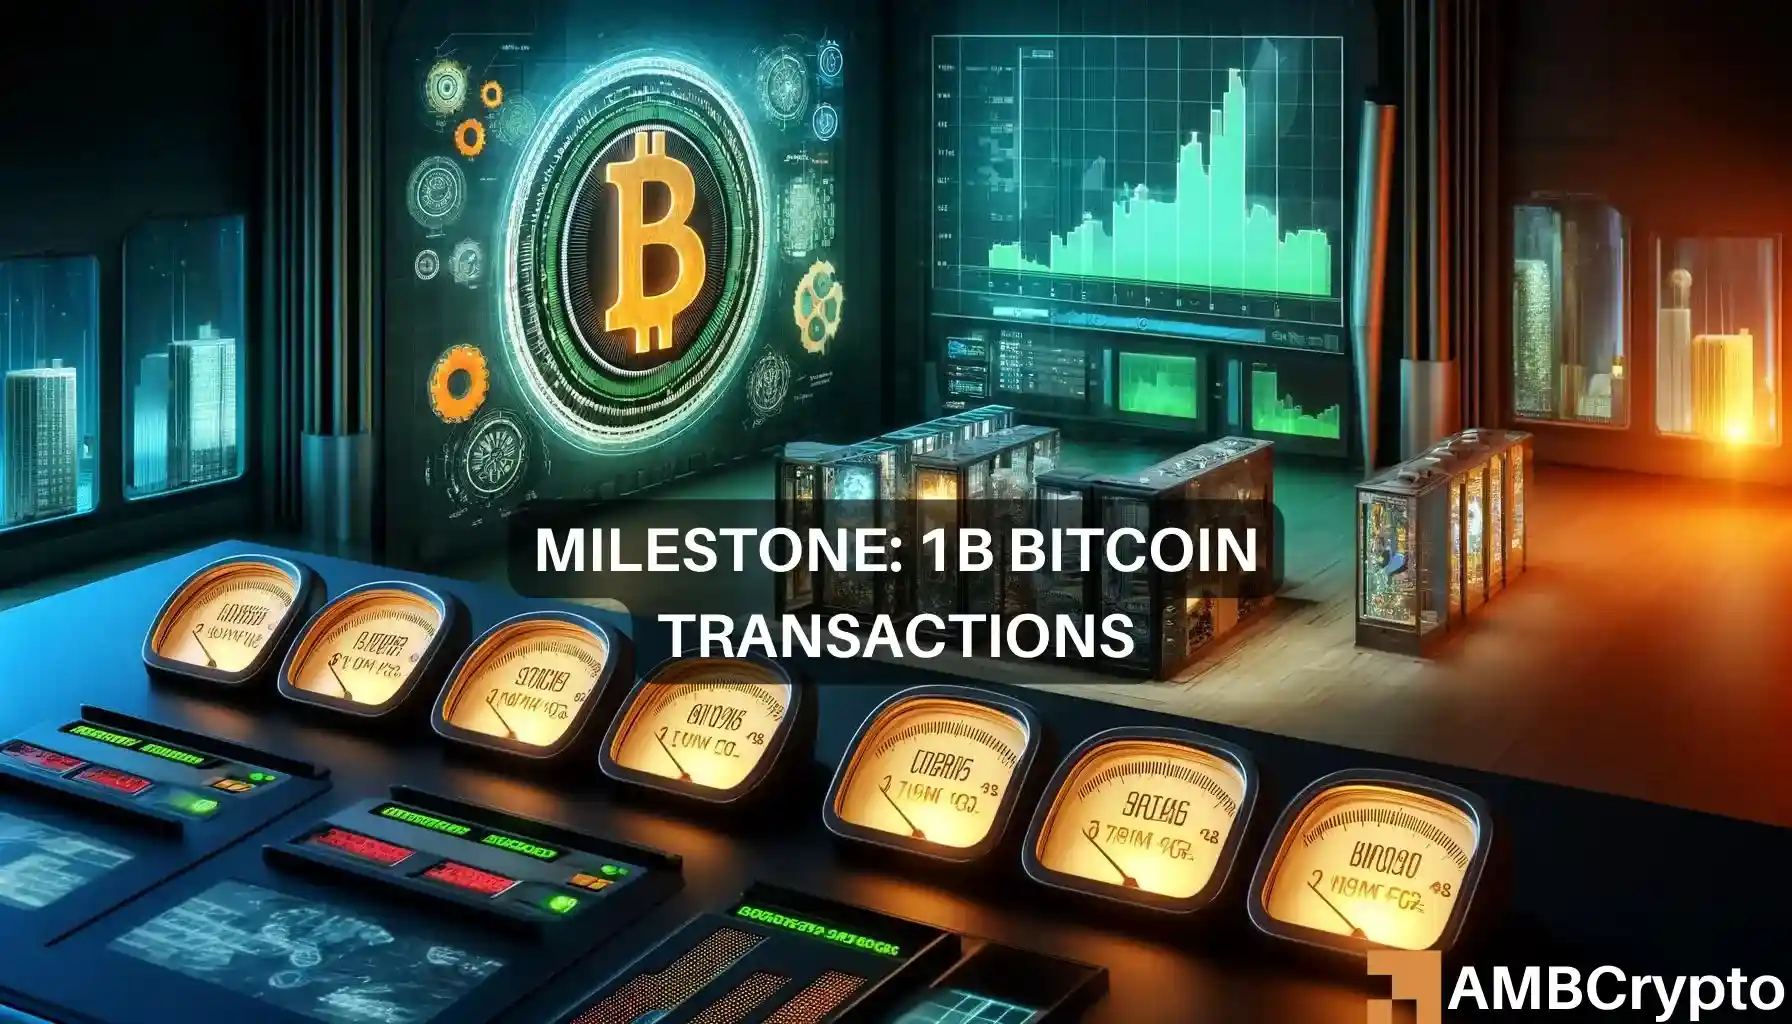 Will Bitcoin’s 1B transaction record give BTC the push it needs?